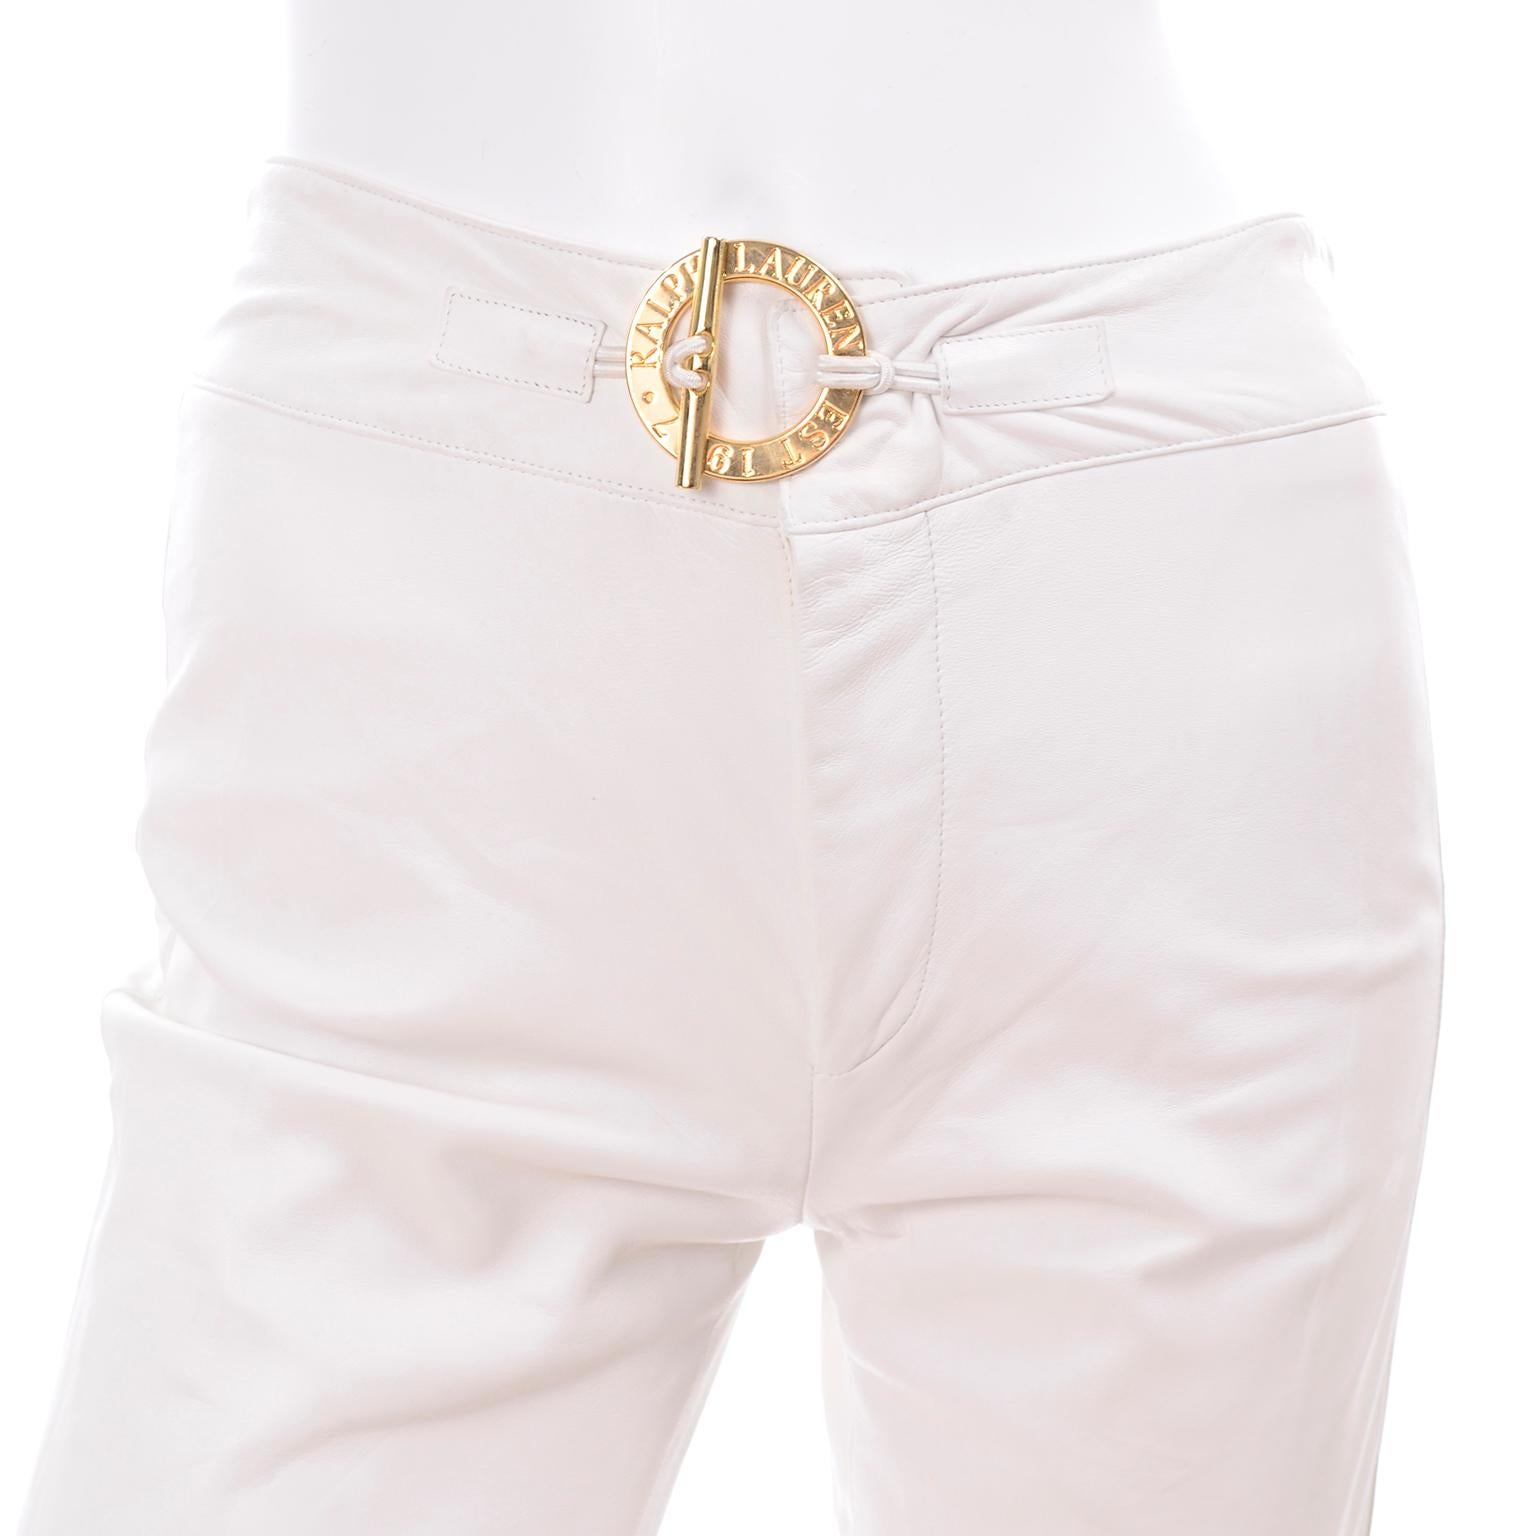 Women's New Ralph Lauren White Leather Pants W Navy Blue Stripes w/ Original Tag